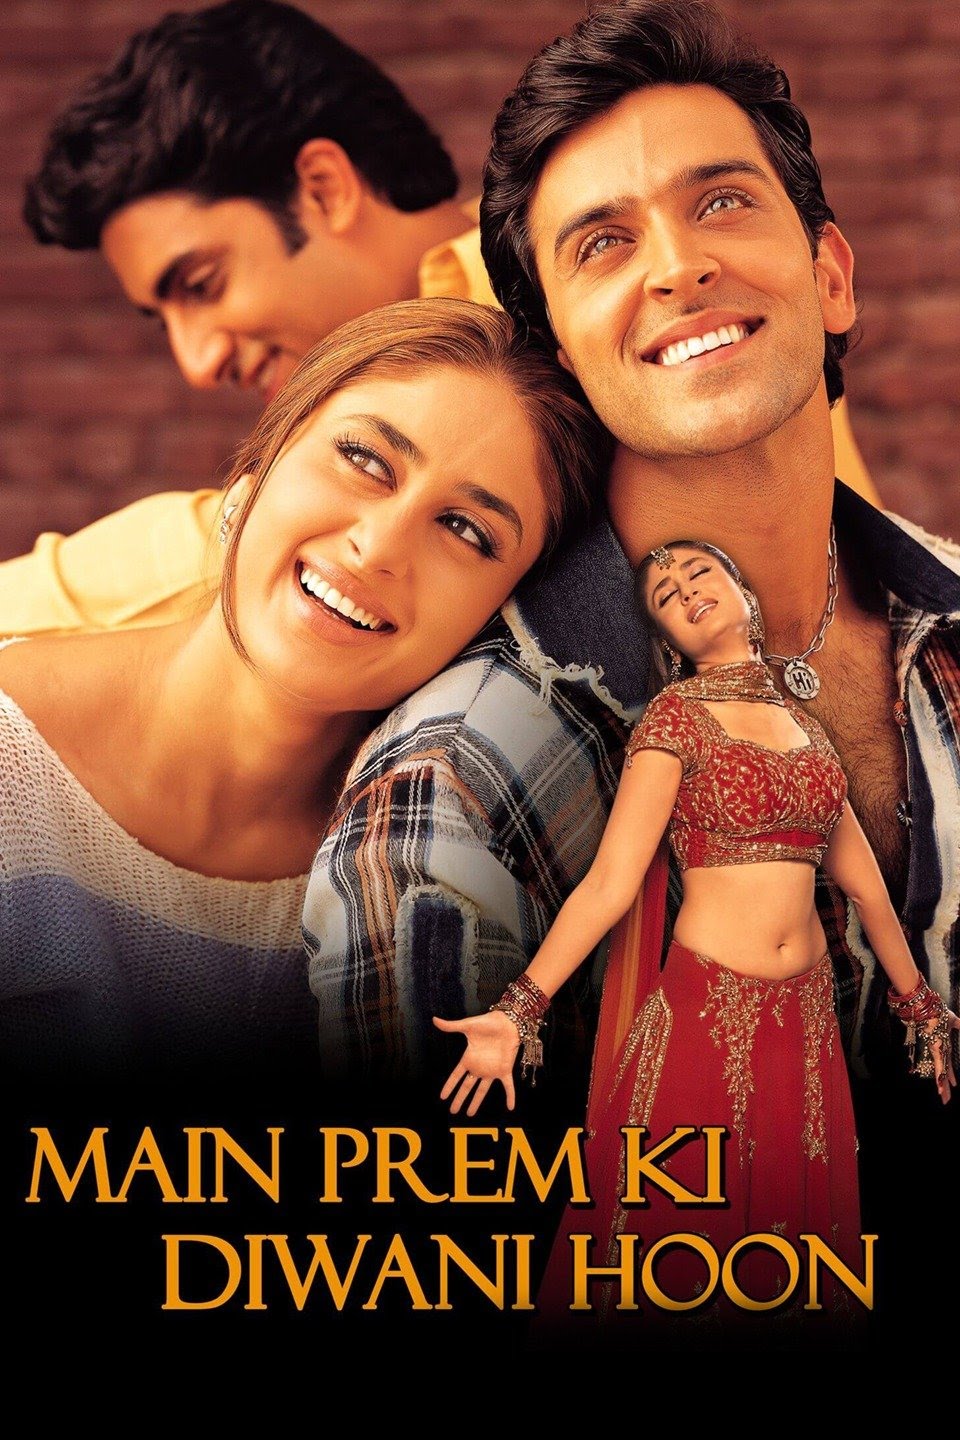 Main Prem Ki Diwani Hoon (2003) Hindi Movie 1080p 720p 480p HDRip ESub Download